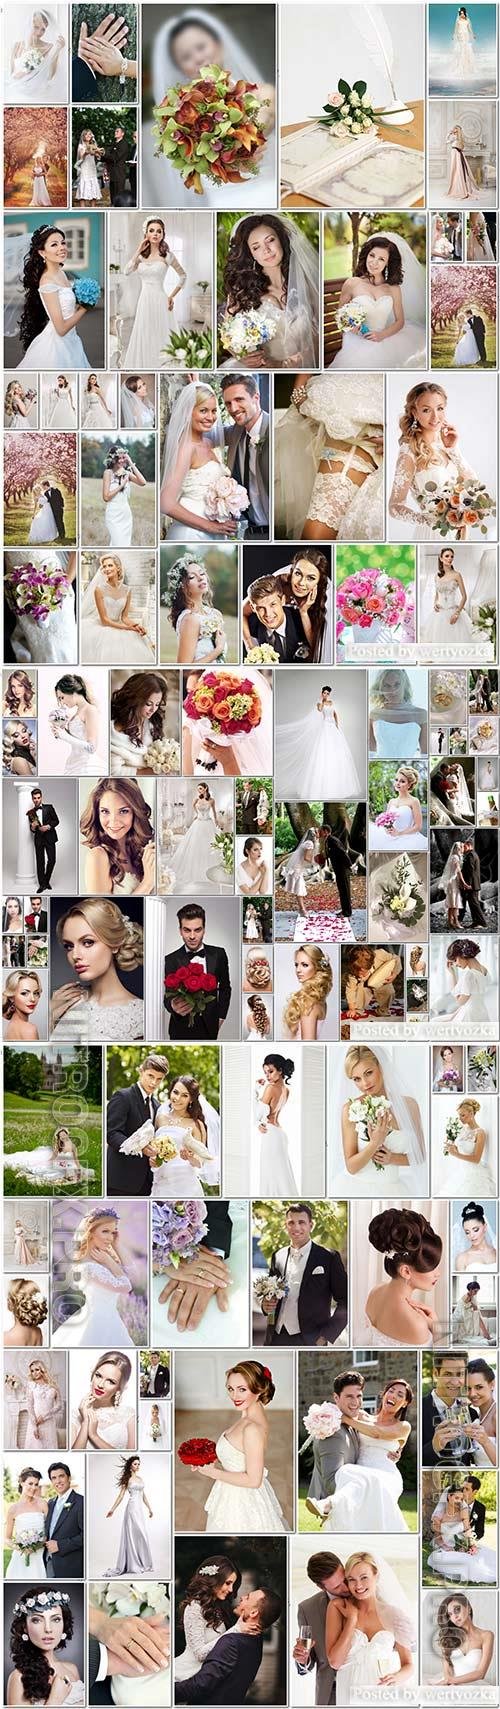 100 Bundle beautiful bride and groom, wedding stock photo vol 1